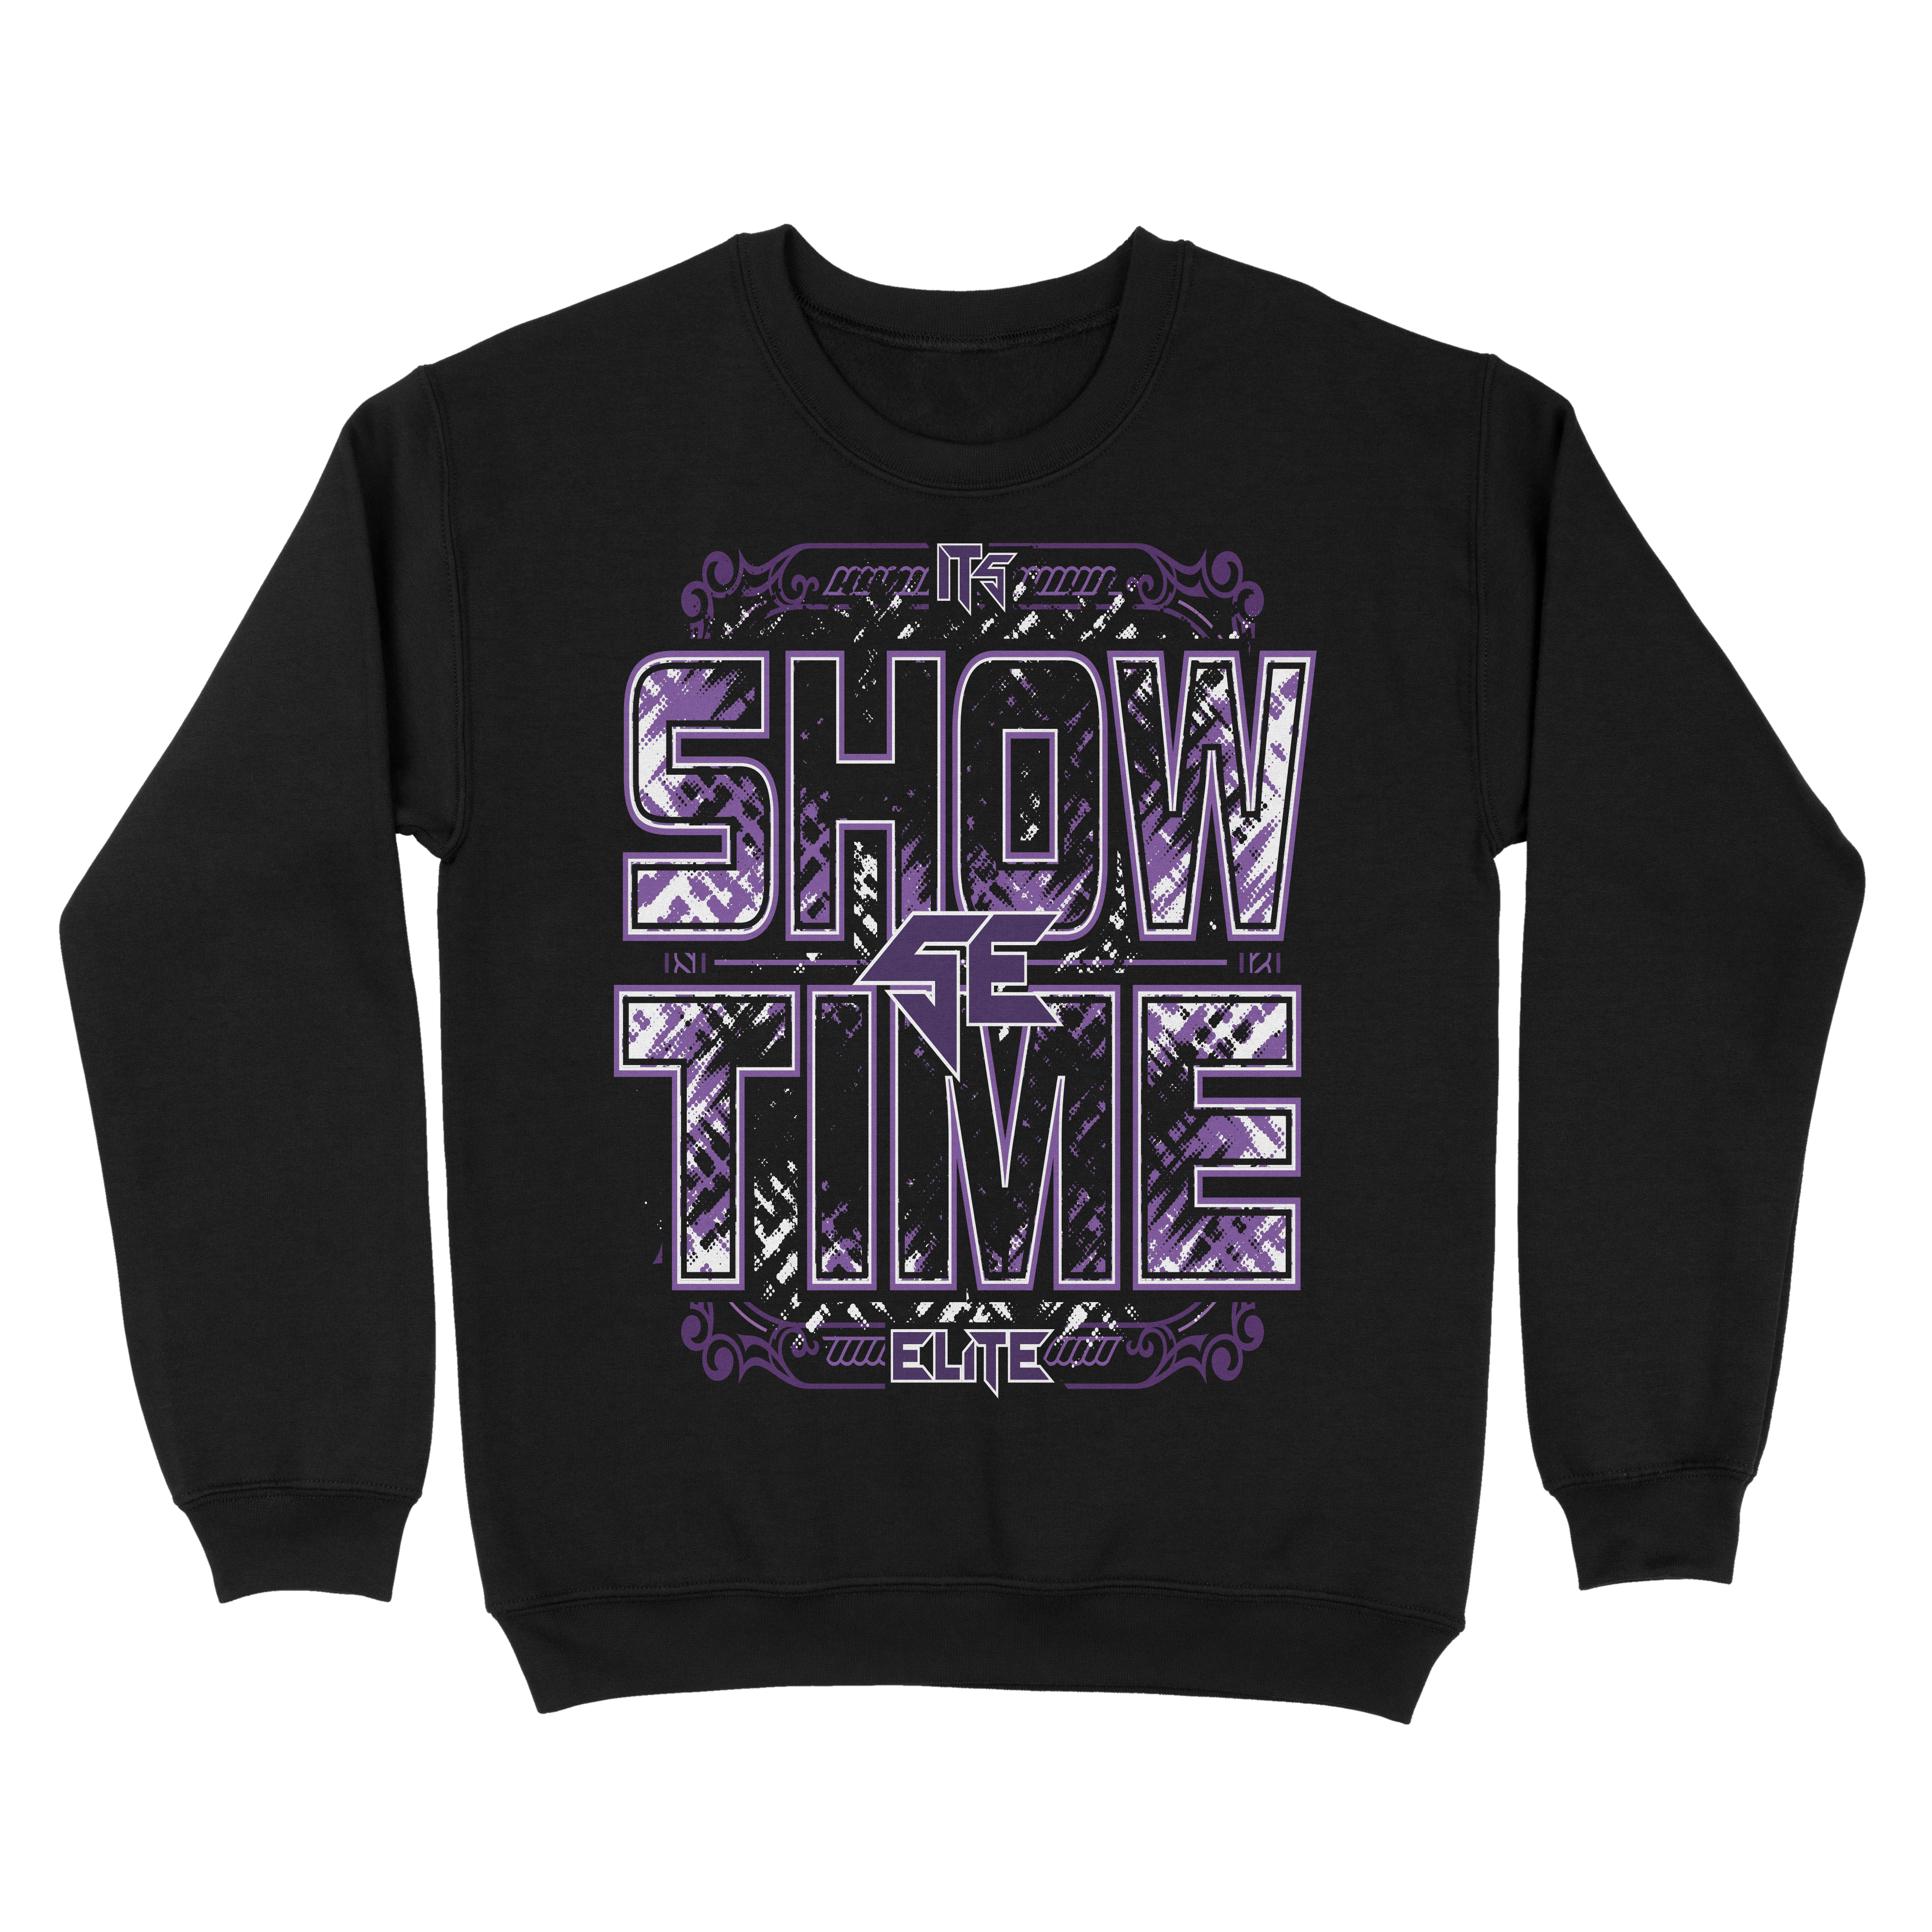 It's Showtime! - T-Shirt & More